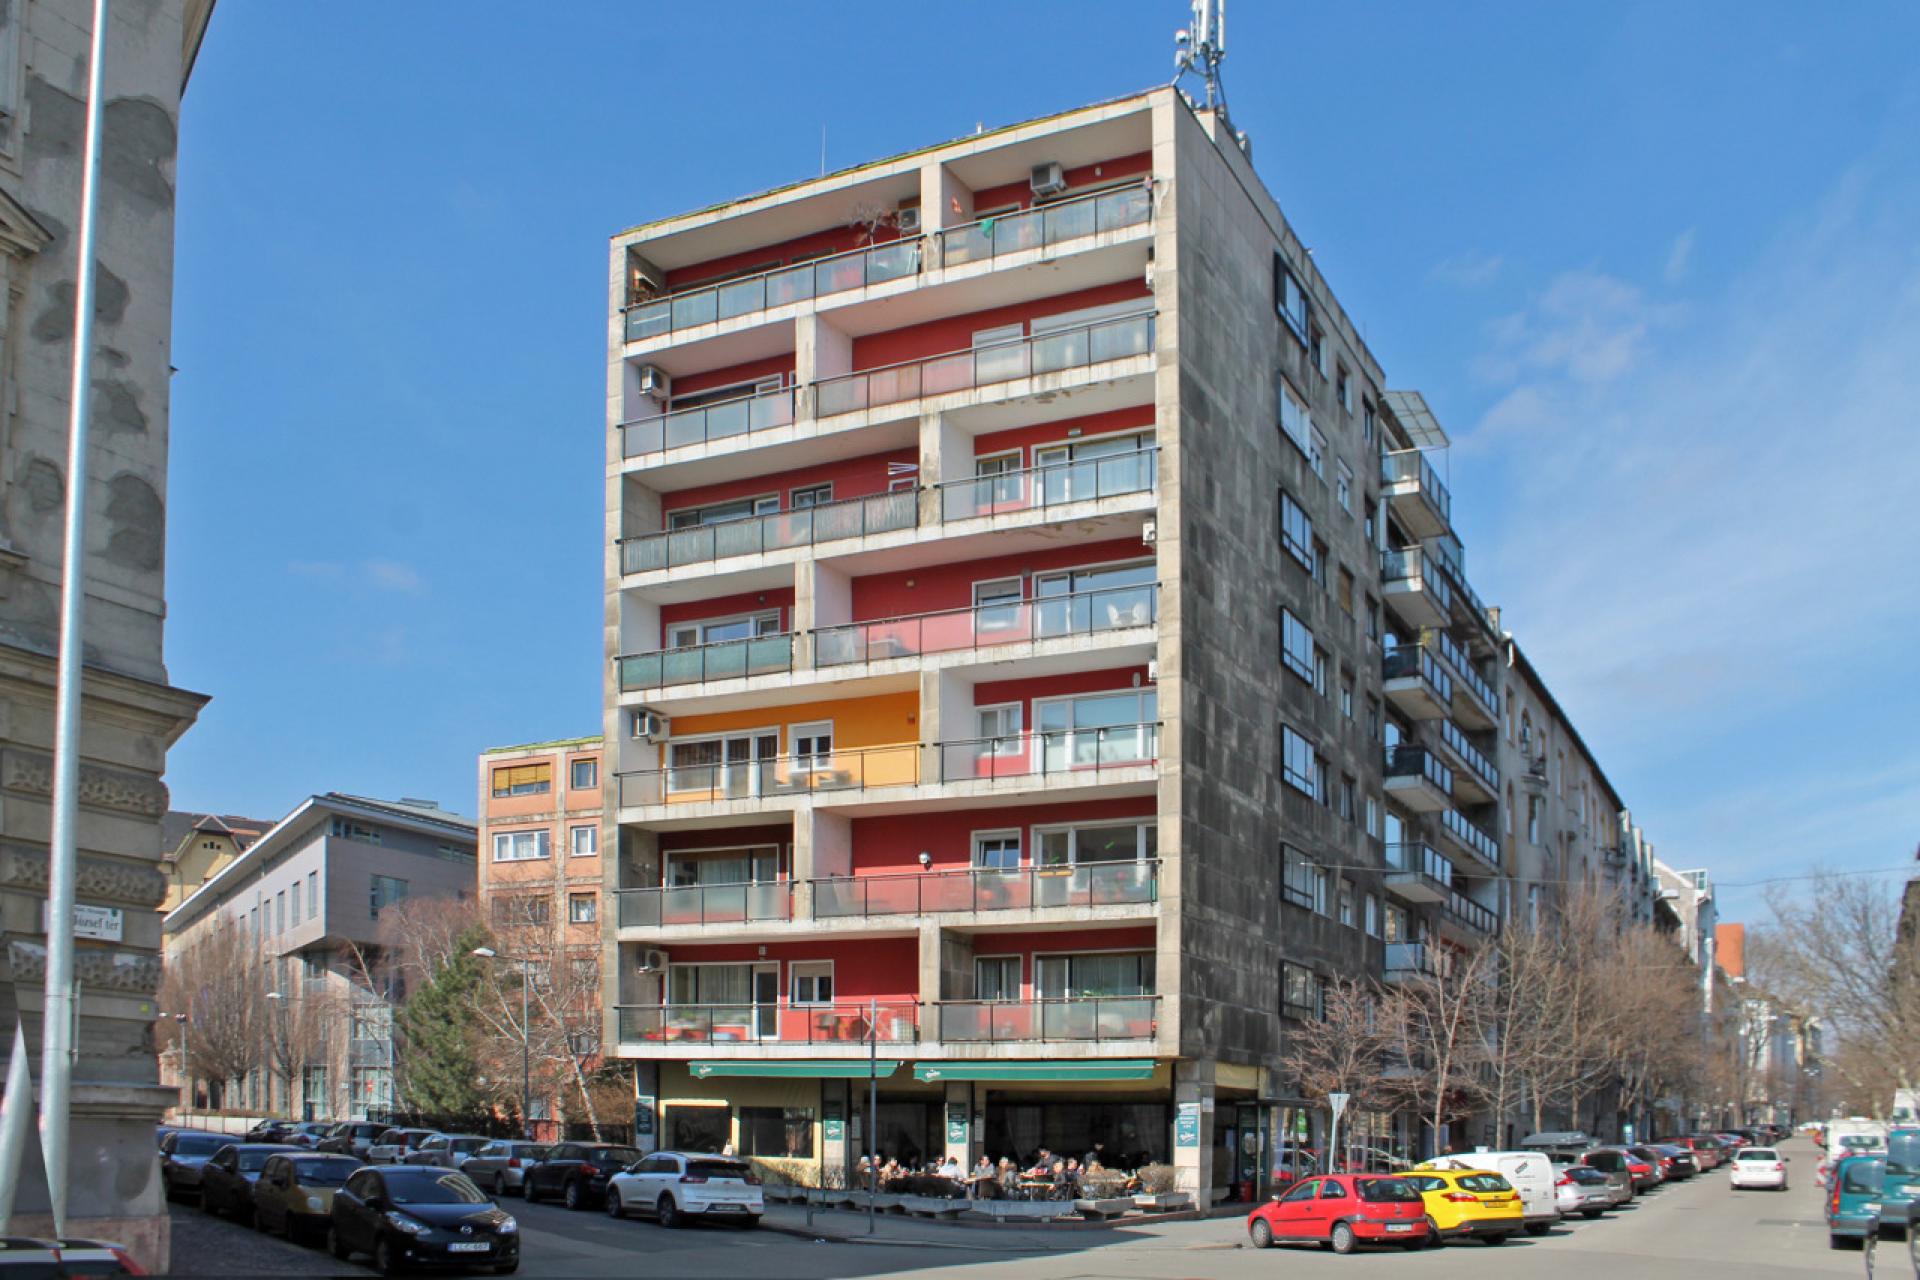 Mináry’s apartment building from 1957. | Photo by Dániel Kovács